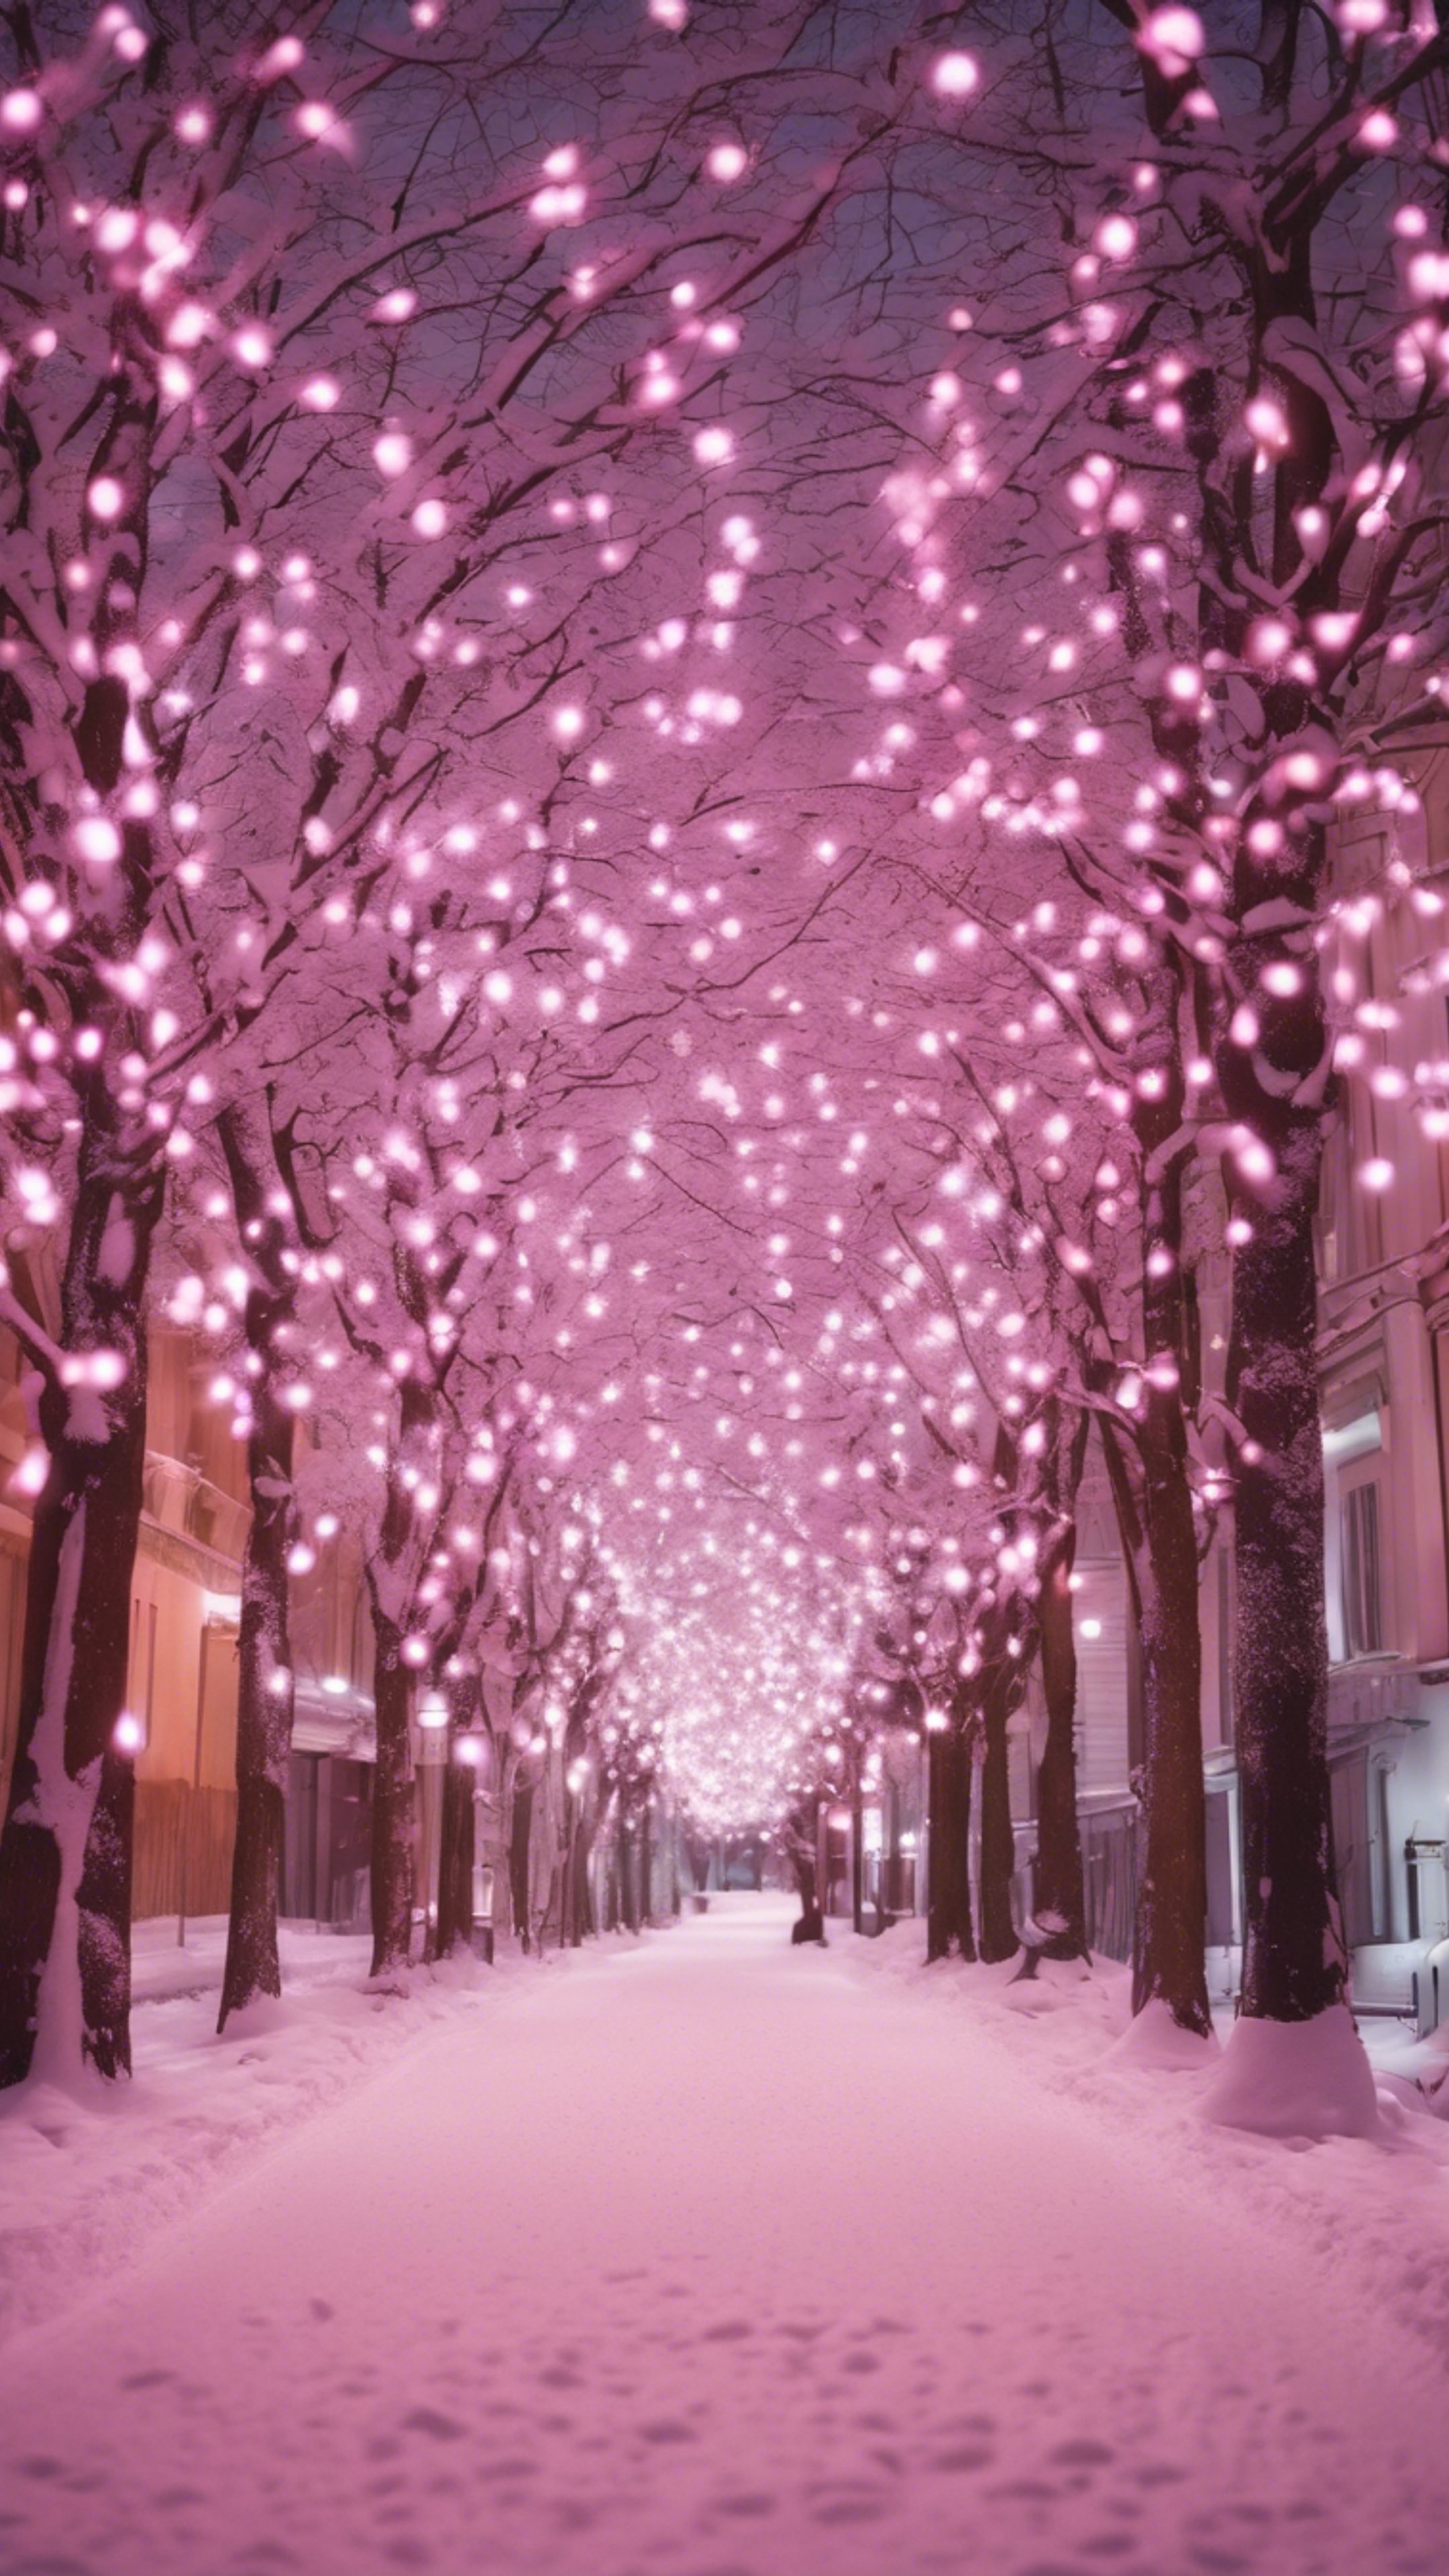 A snow-covered street illuminated by twinkling pink Christmas lights. ورق الجدران[4ec6c372f2074900819e]